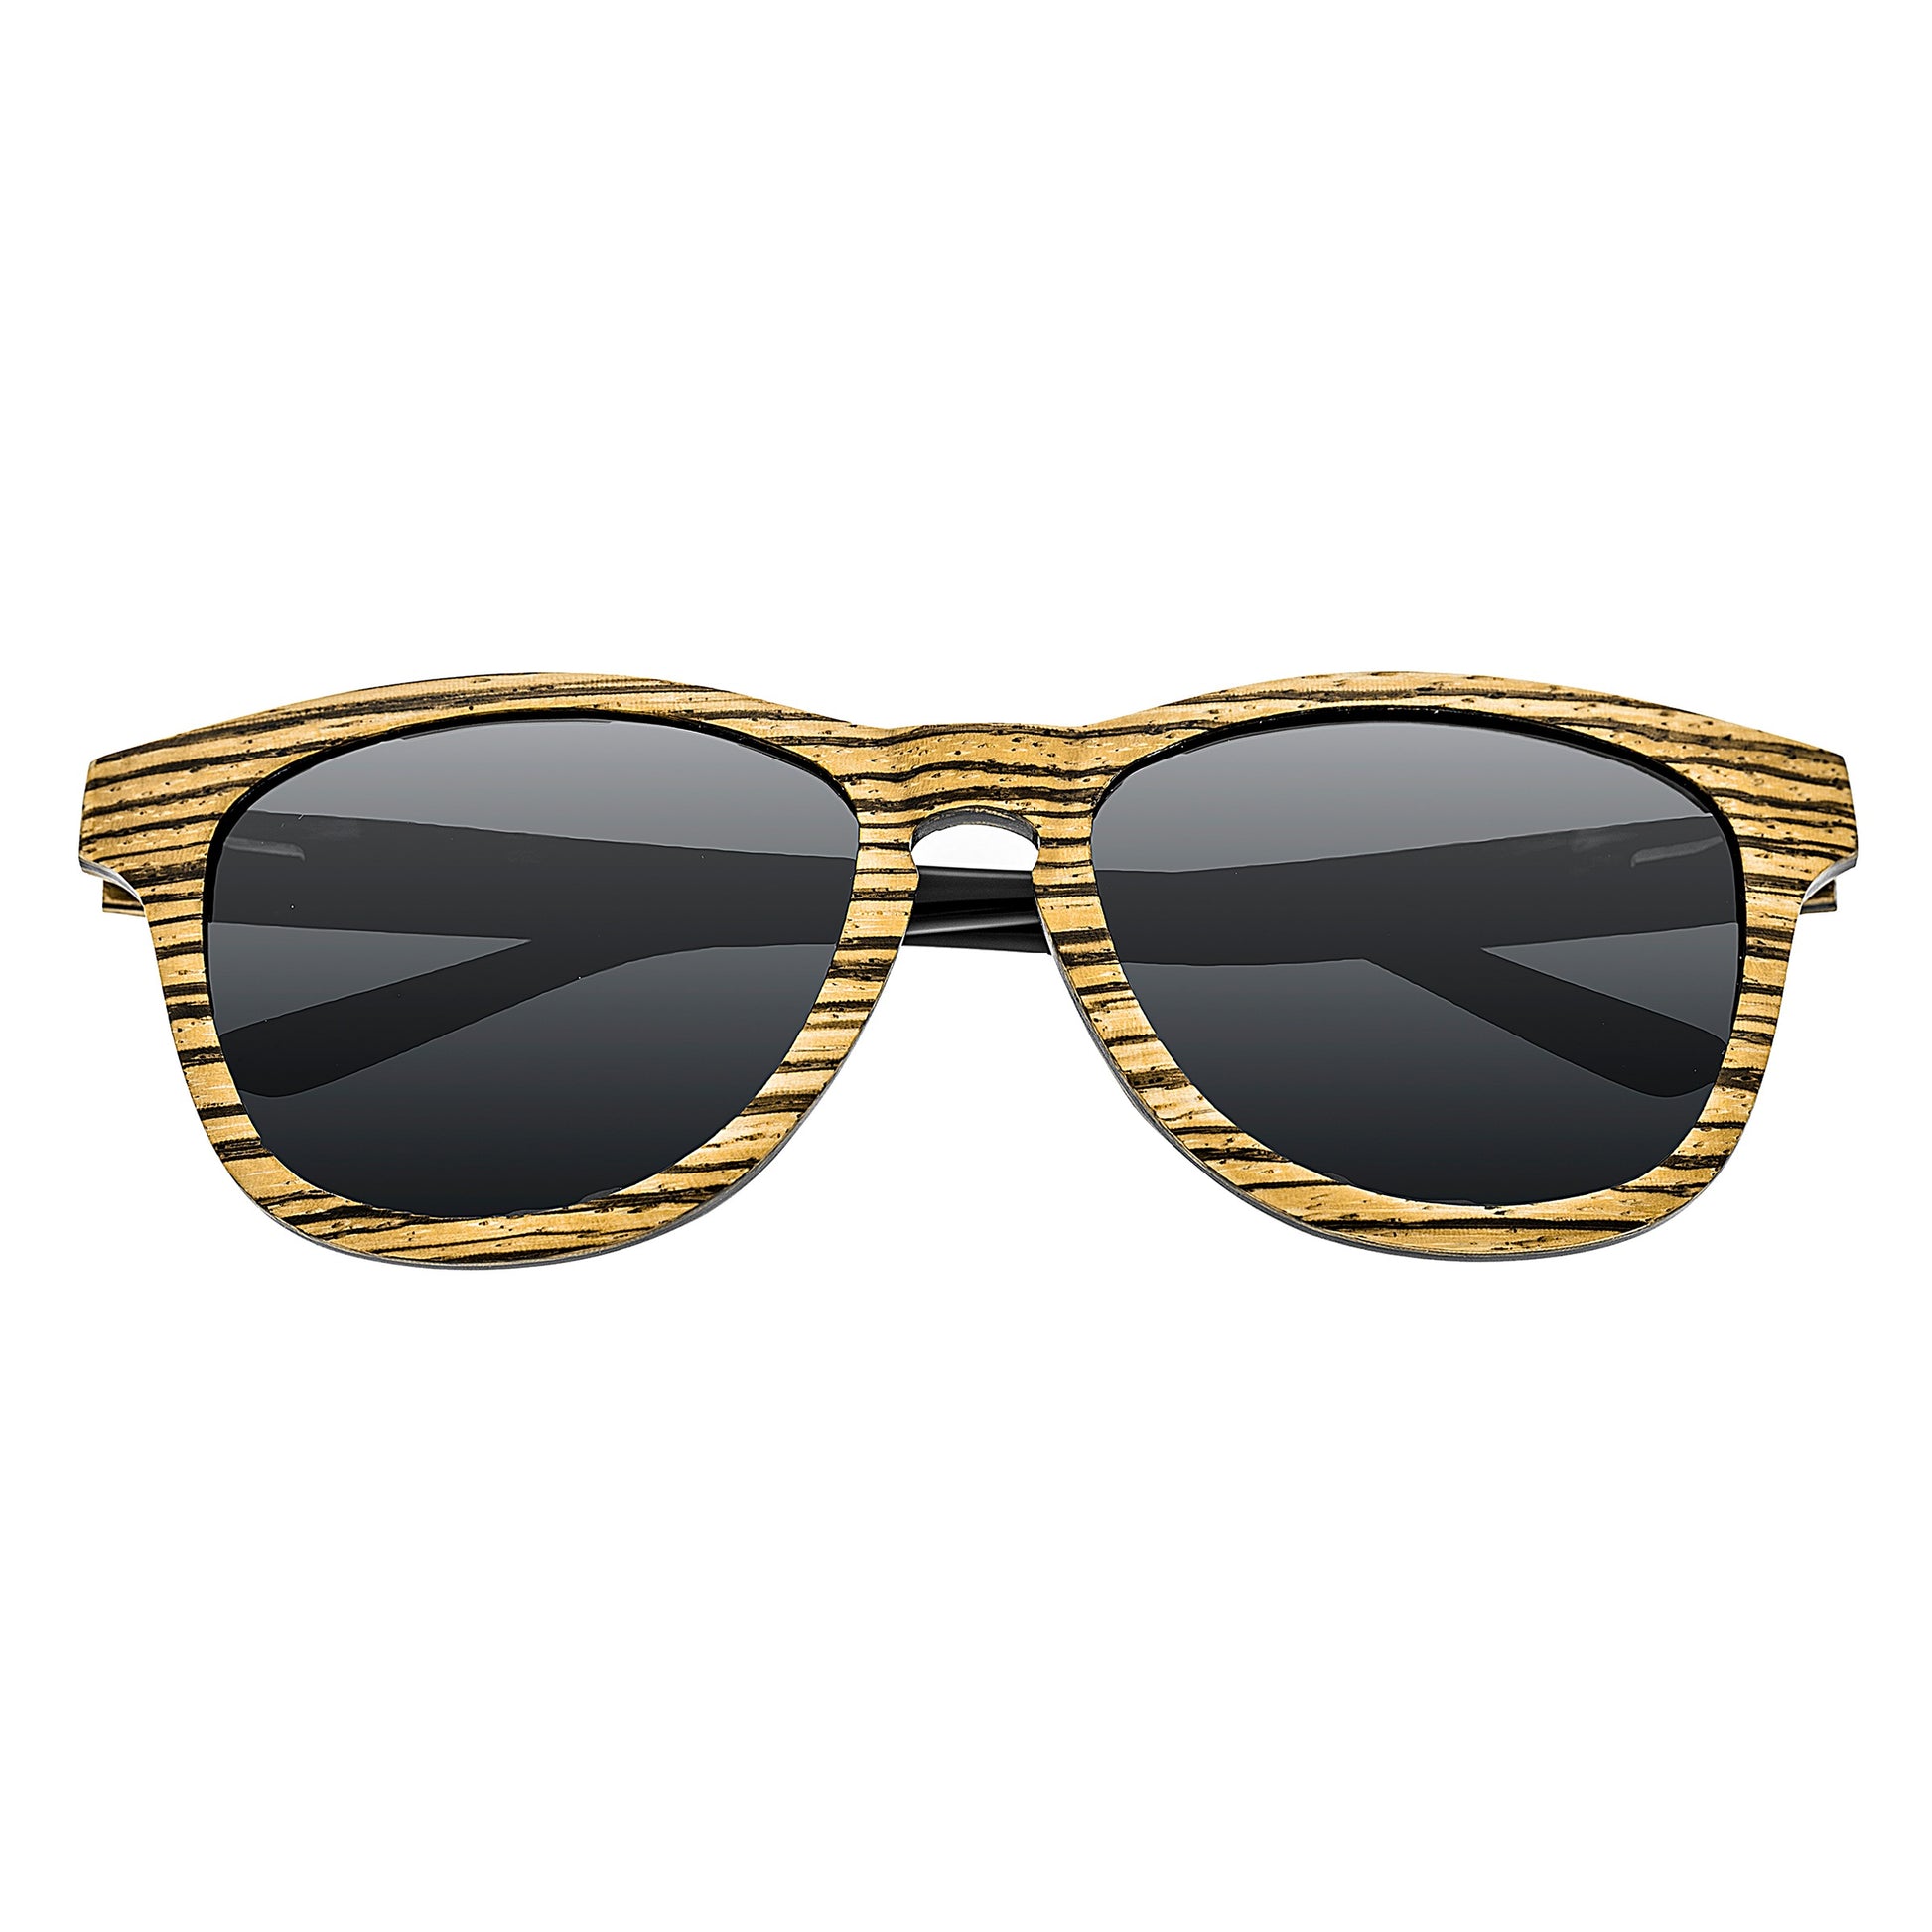 Earth Wood Cove Polarized Sunglasses - Zebrawood/Black - ESG010GR